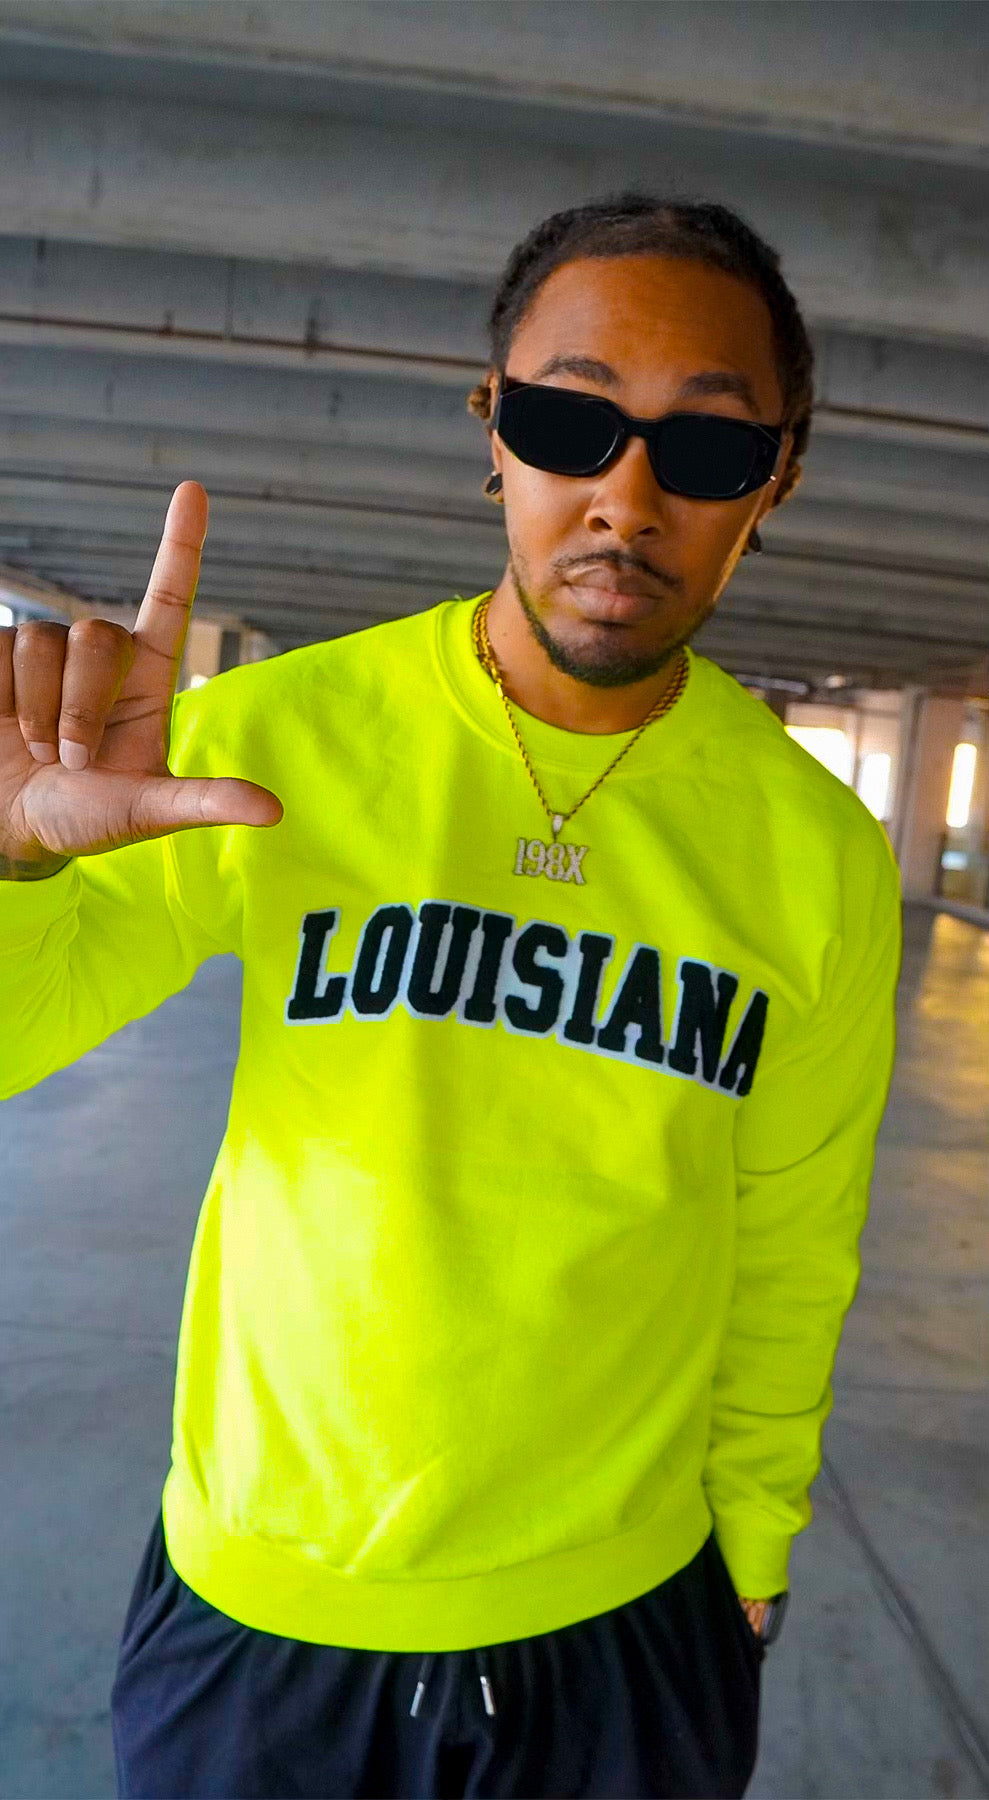 Louisiana Lemon Pepper Sweat Shirt